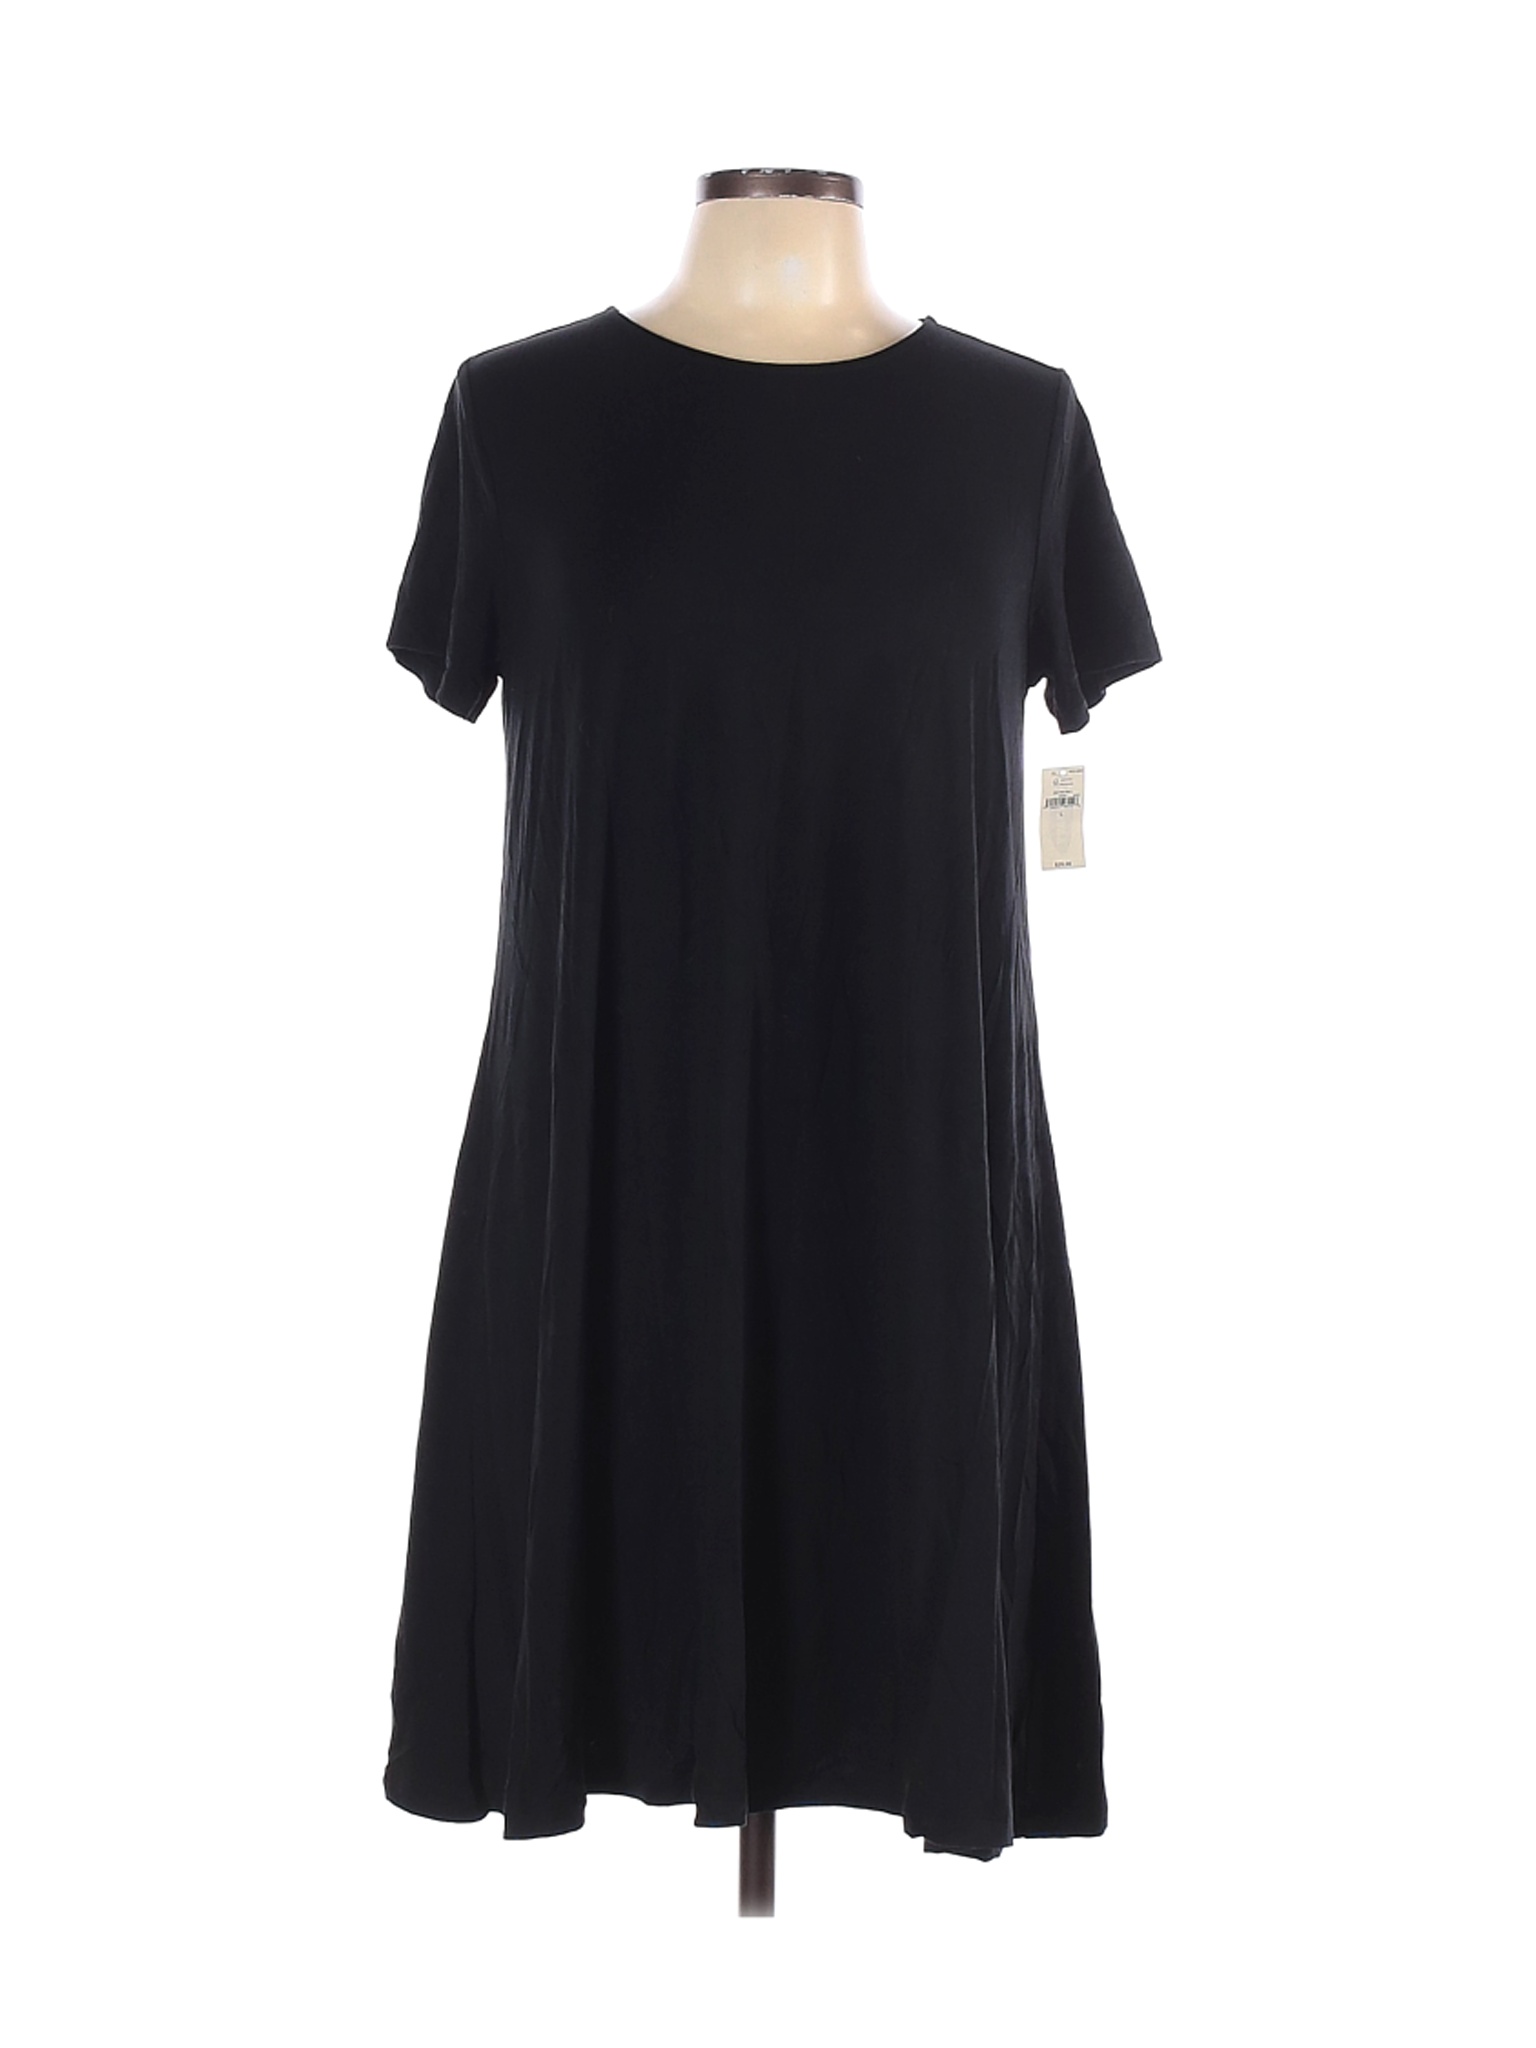 NWT Old Navy Women Black Casual Dress L | eBay